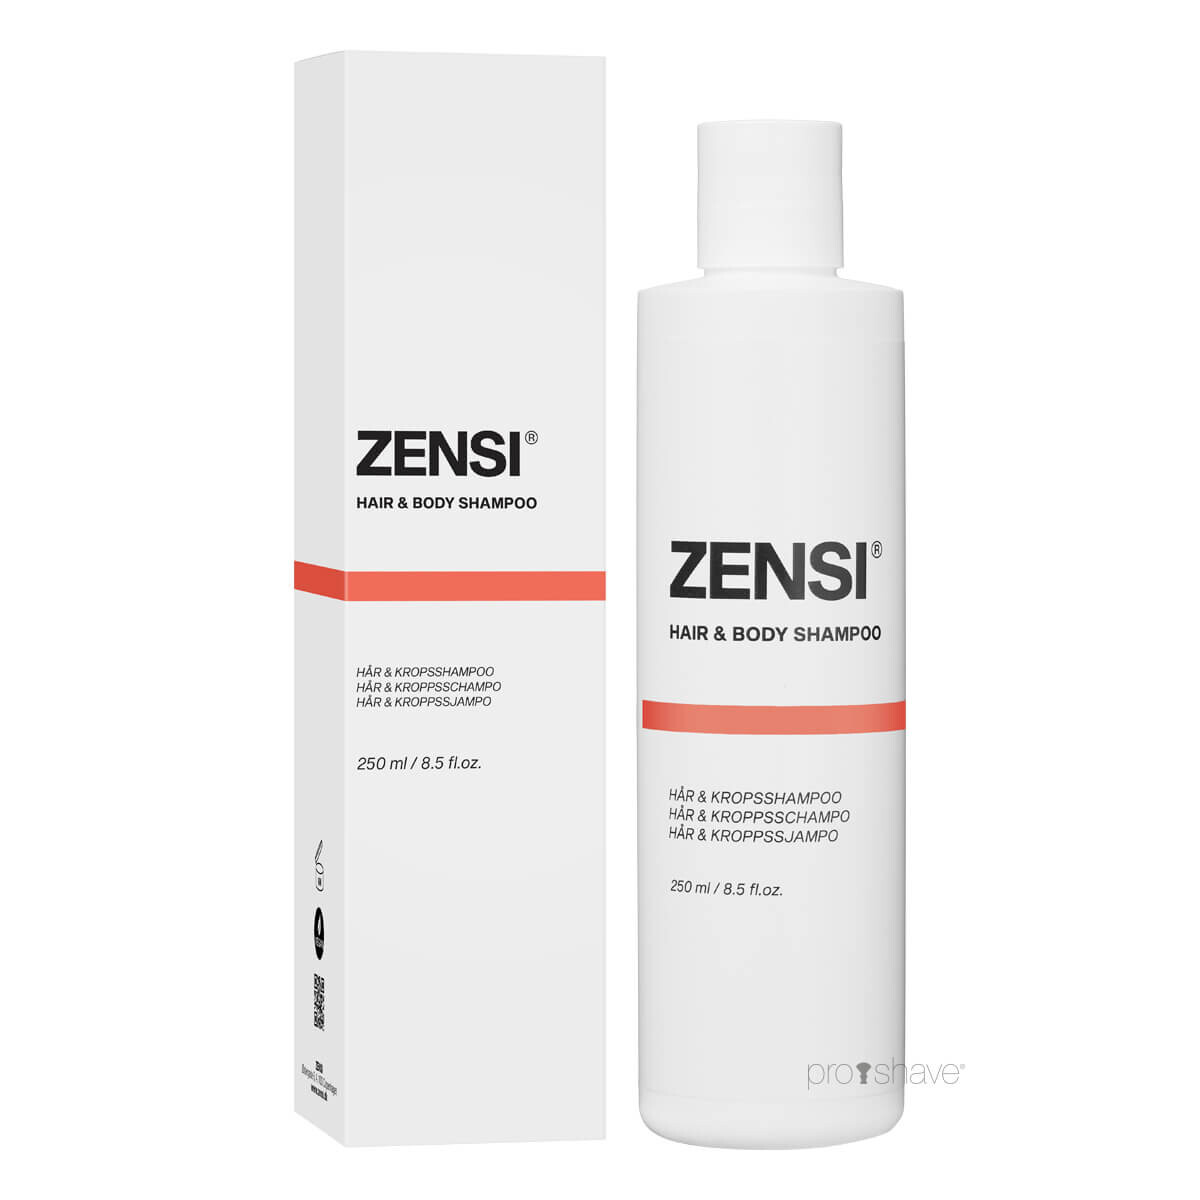 Billede af ZENSI Hair & Body Shampoo, 250 ml.